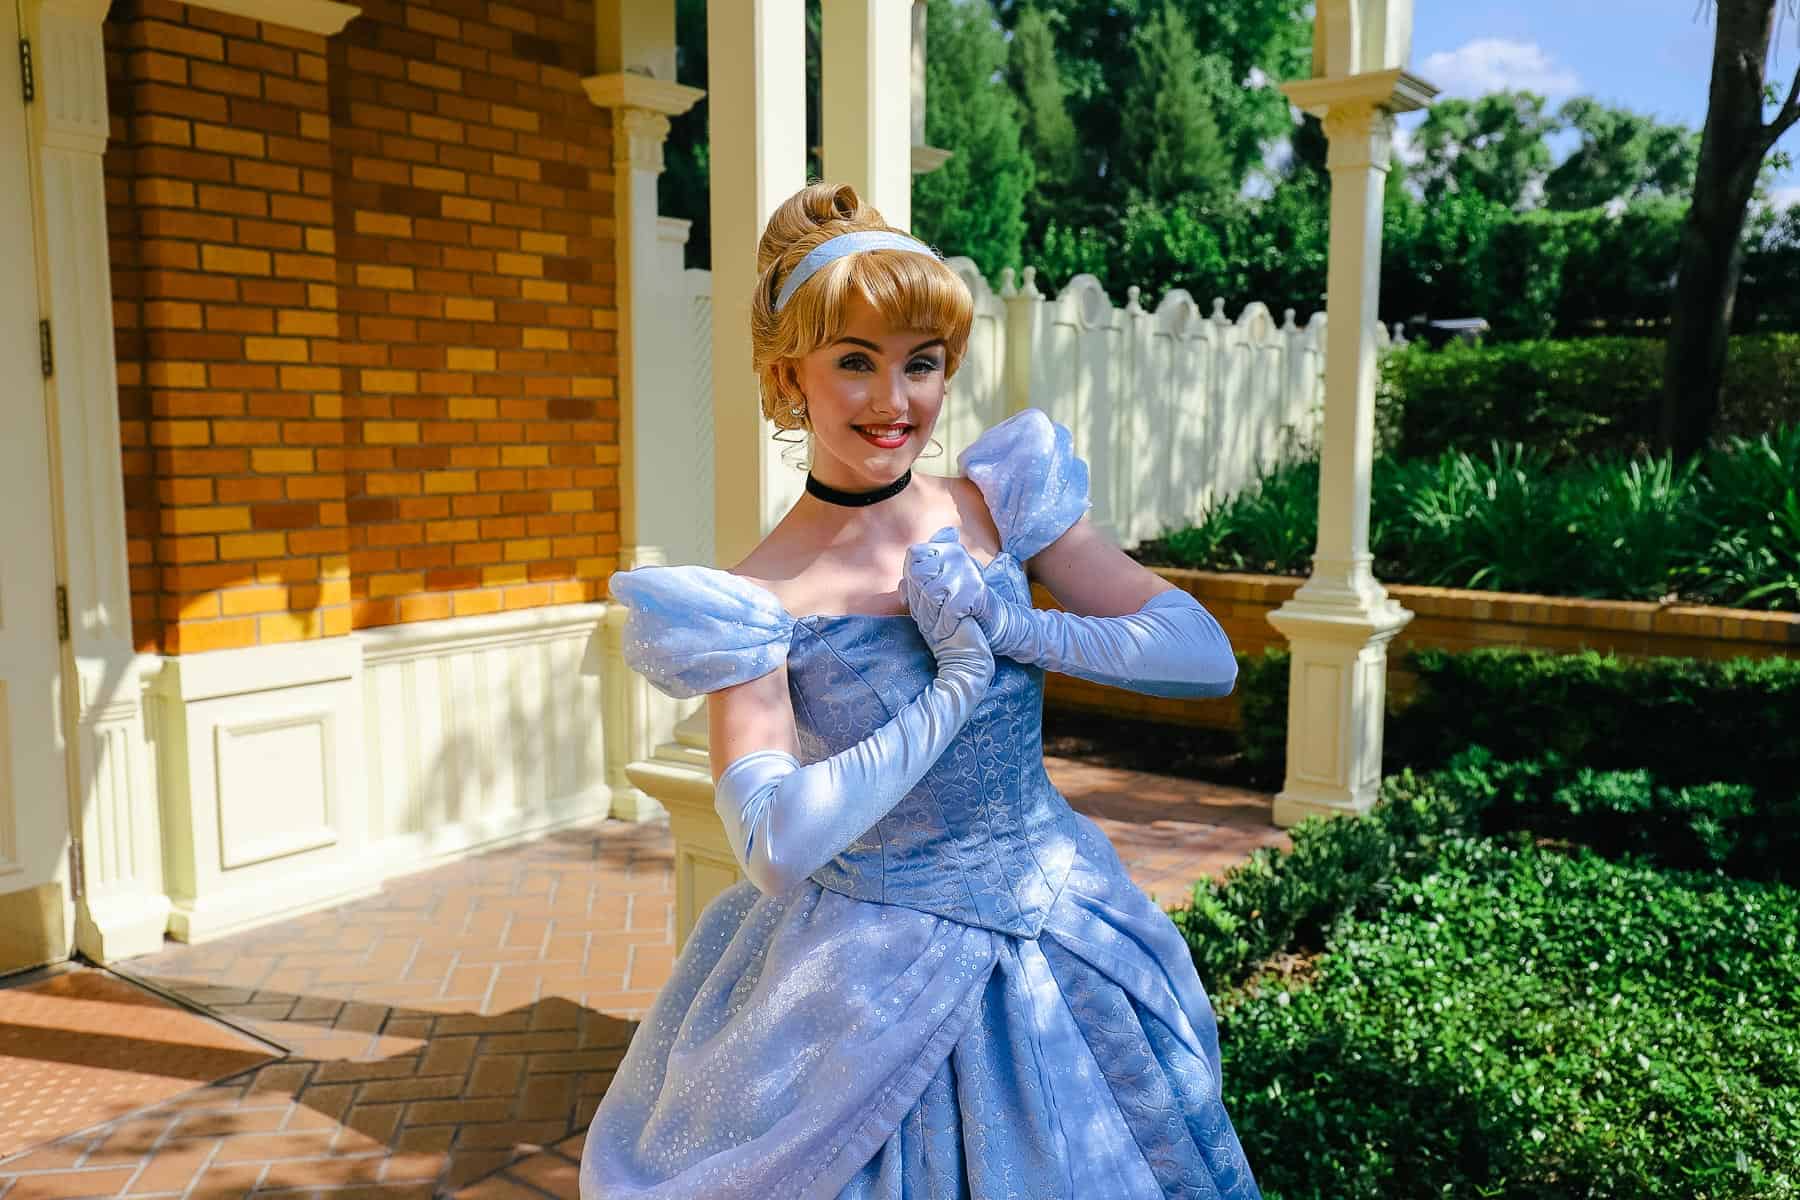 Meet Cinderella at Disney World